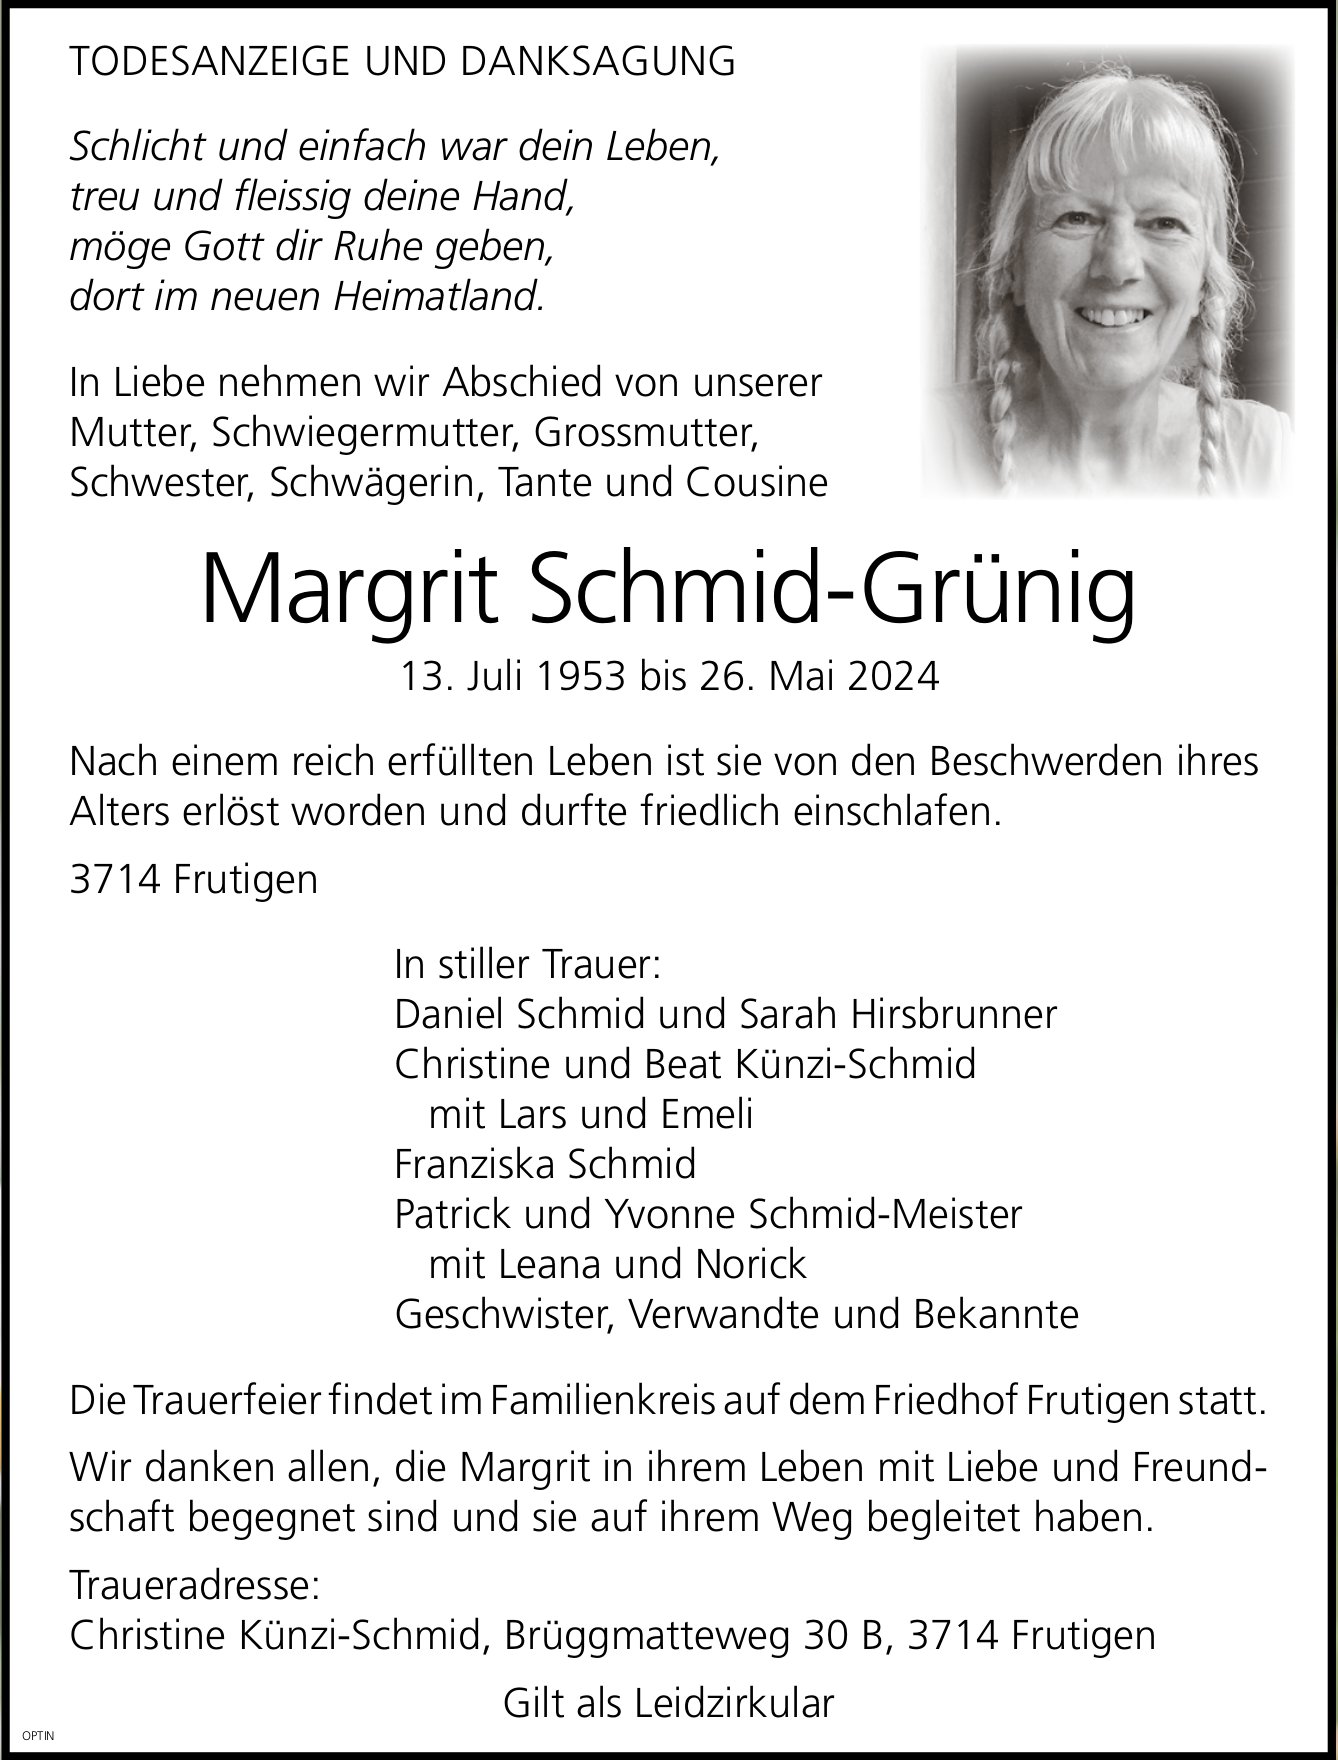 Margrit Schmid-Grünig, Mai 2024 / TA